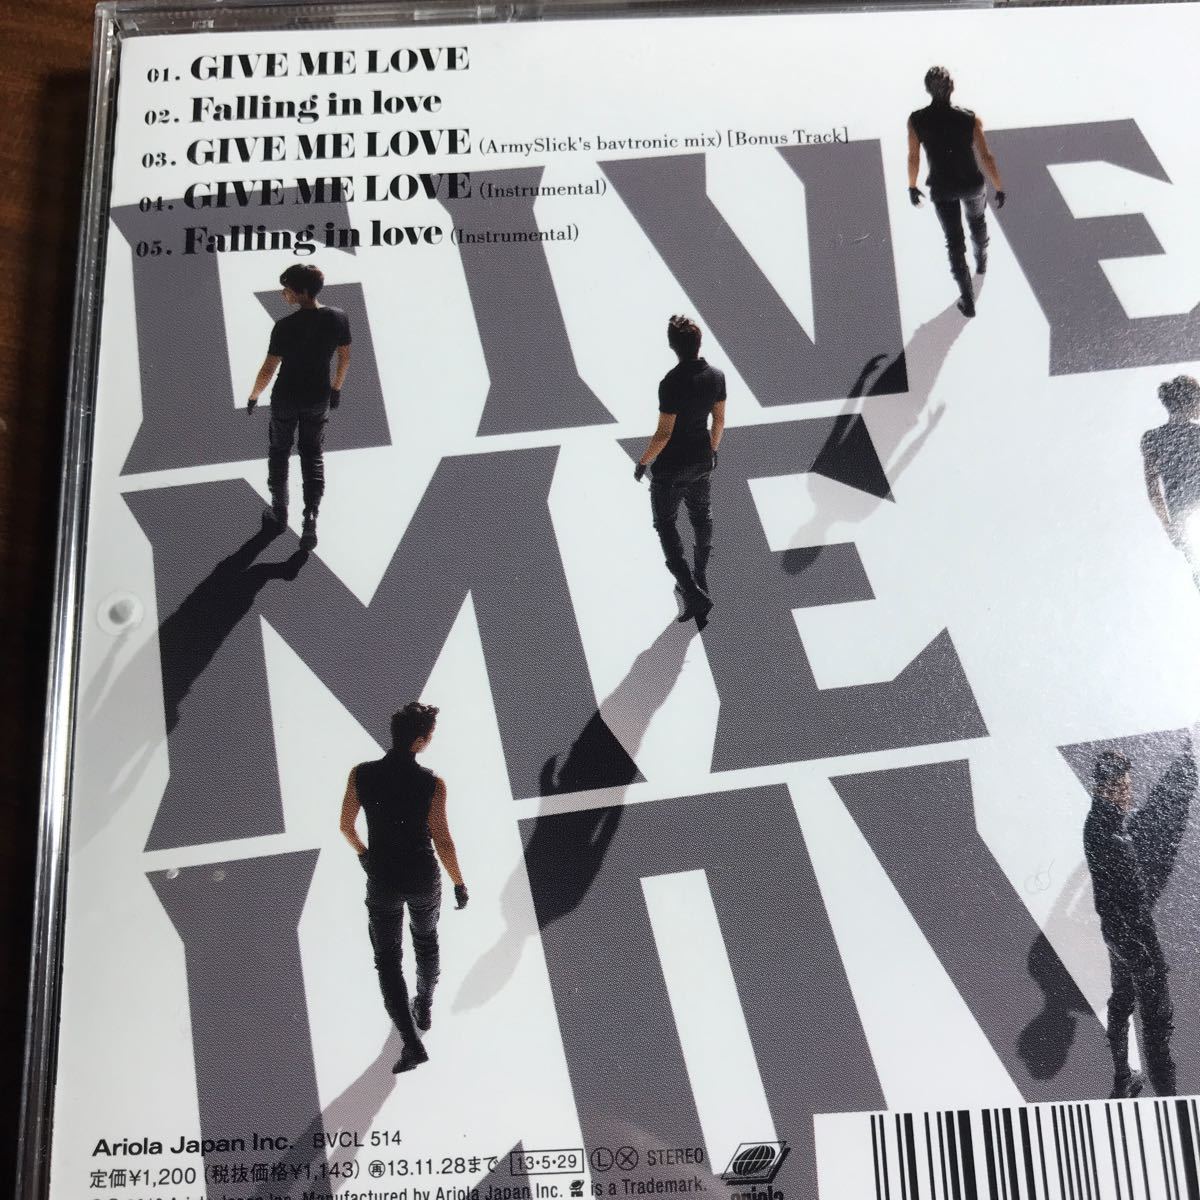 2PM/GIVE ME LOVE（通常盤）